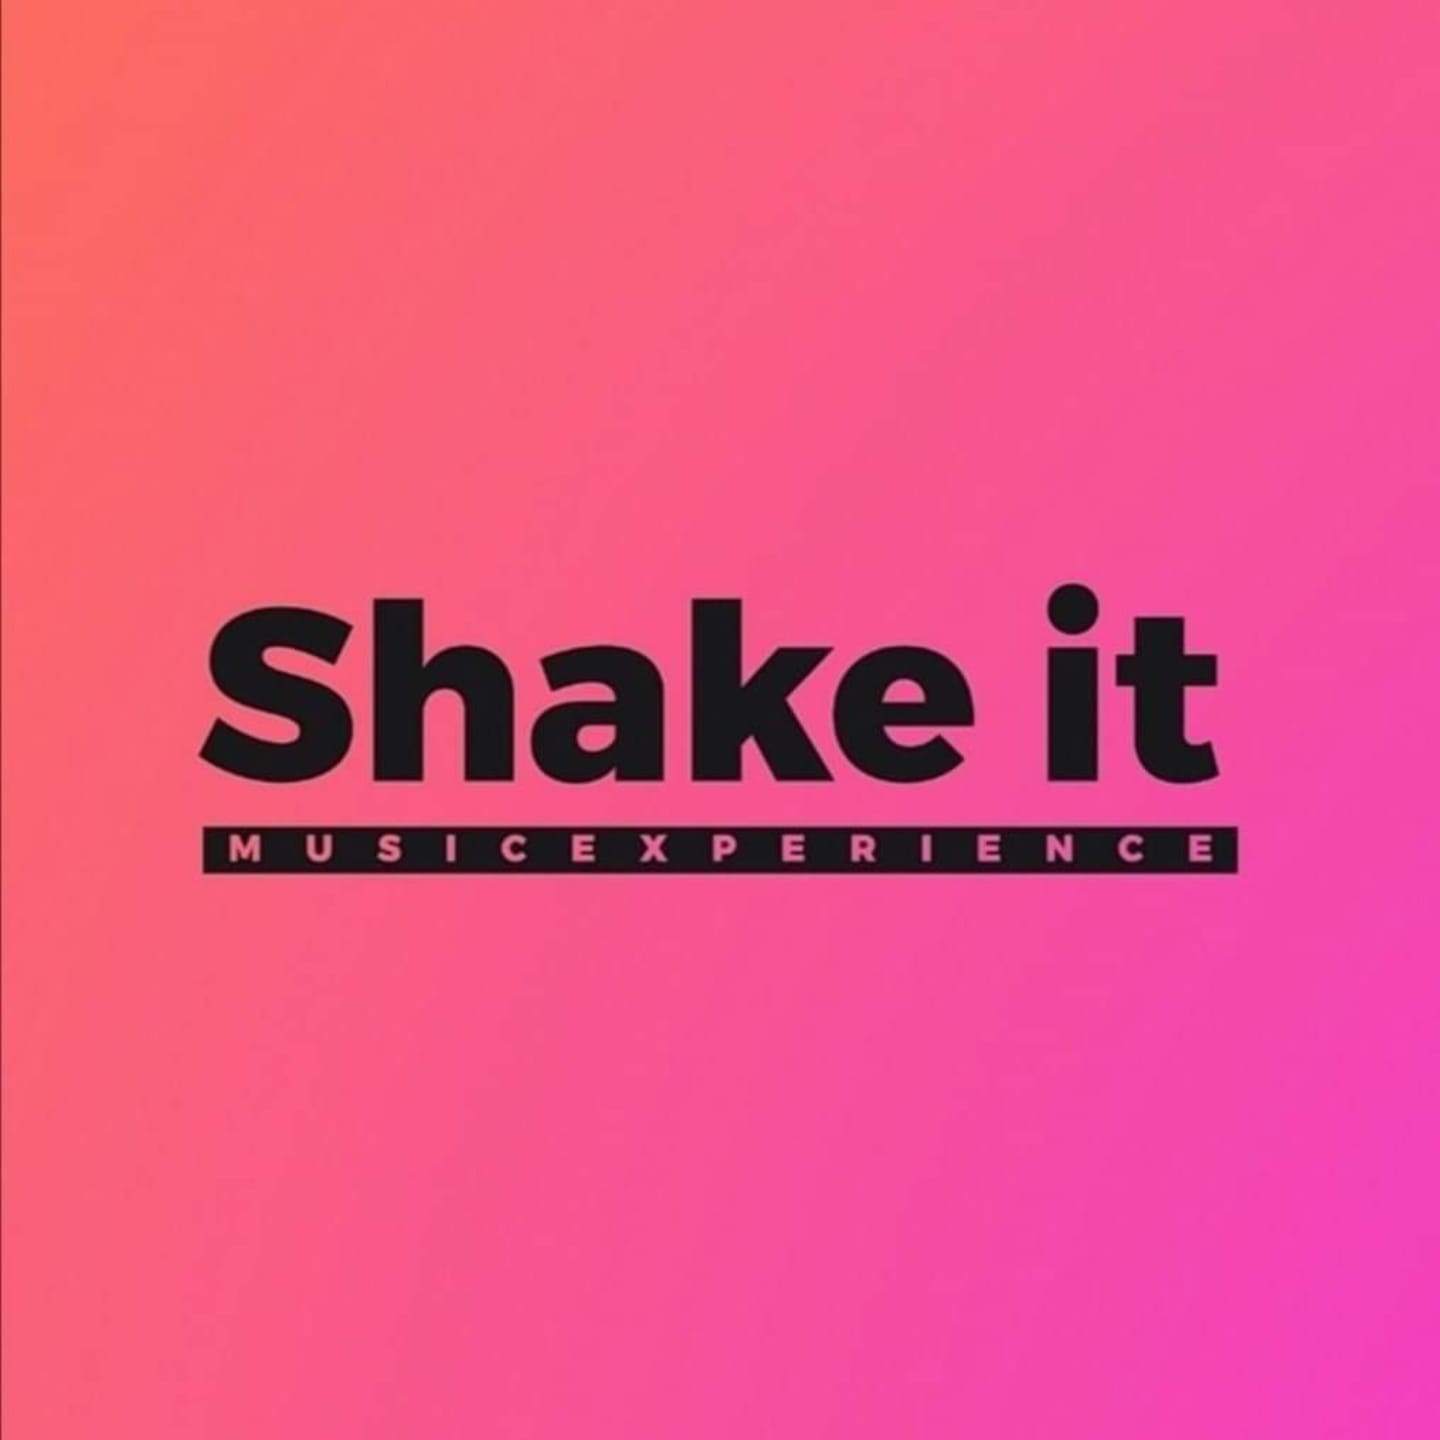 Shake it with Timo Maas - DJ Simi - DJ Deaf - GG Rocco - フライヤー裏